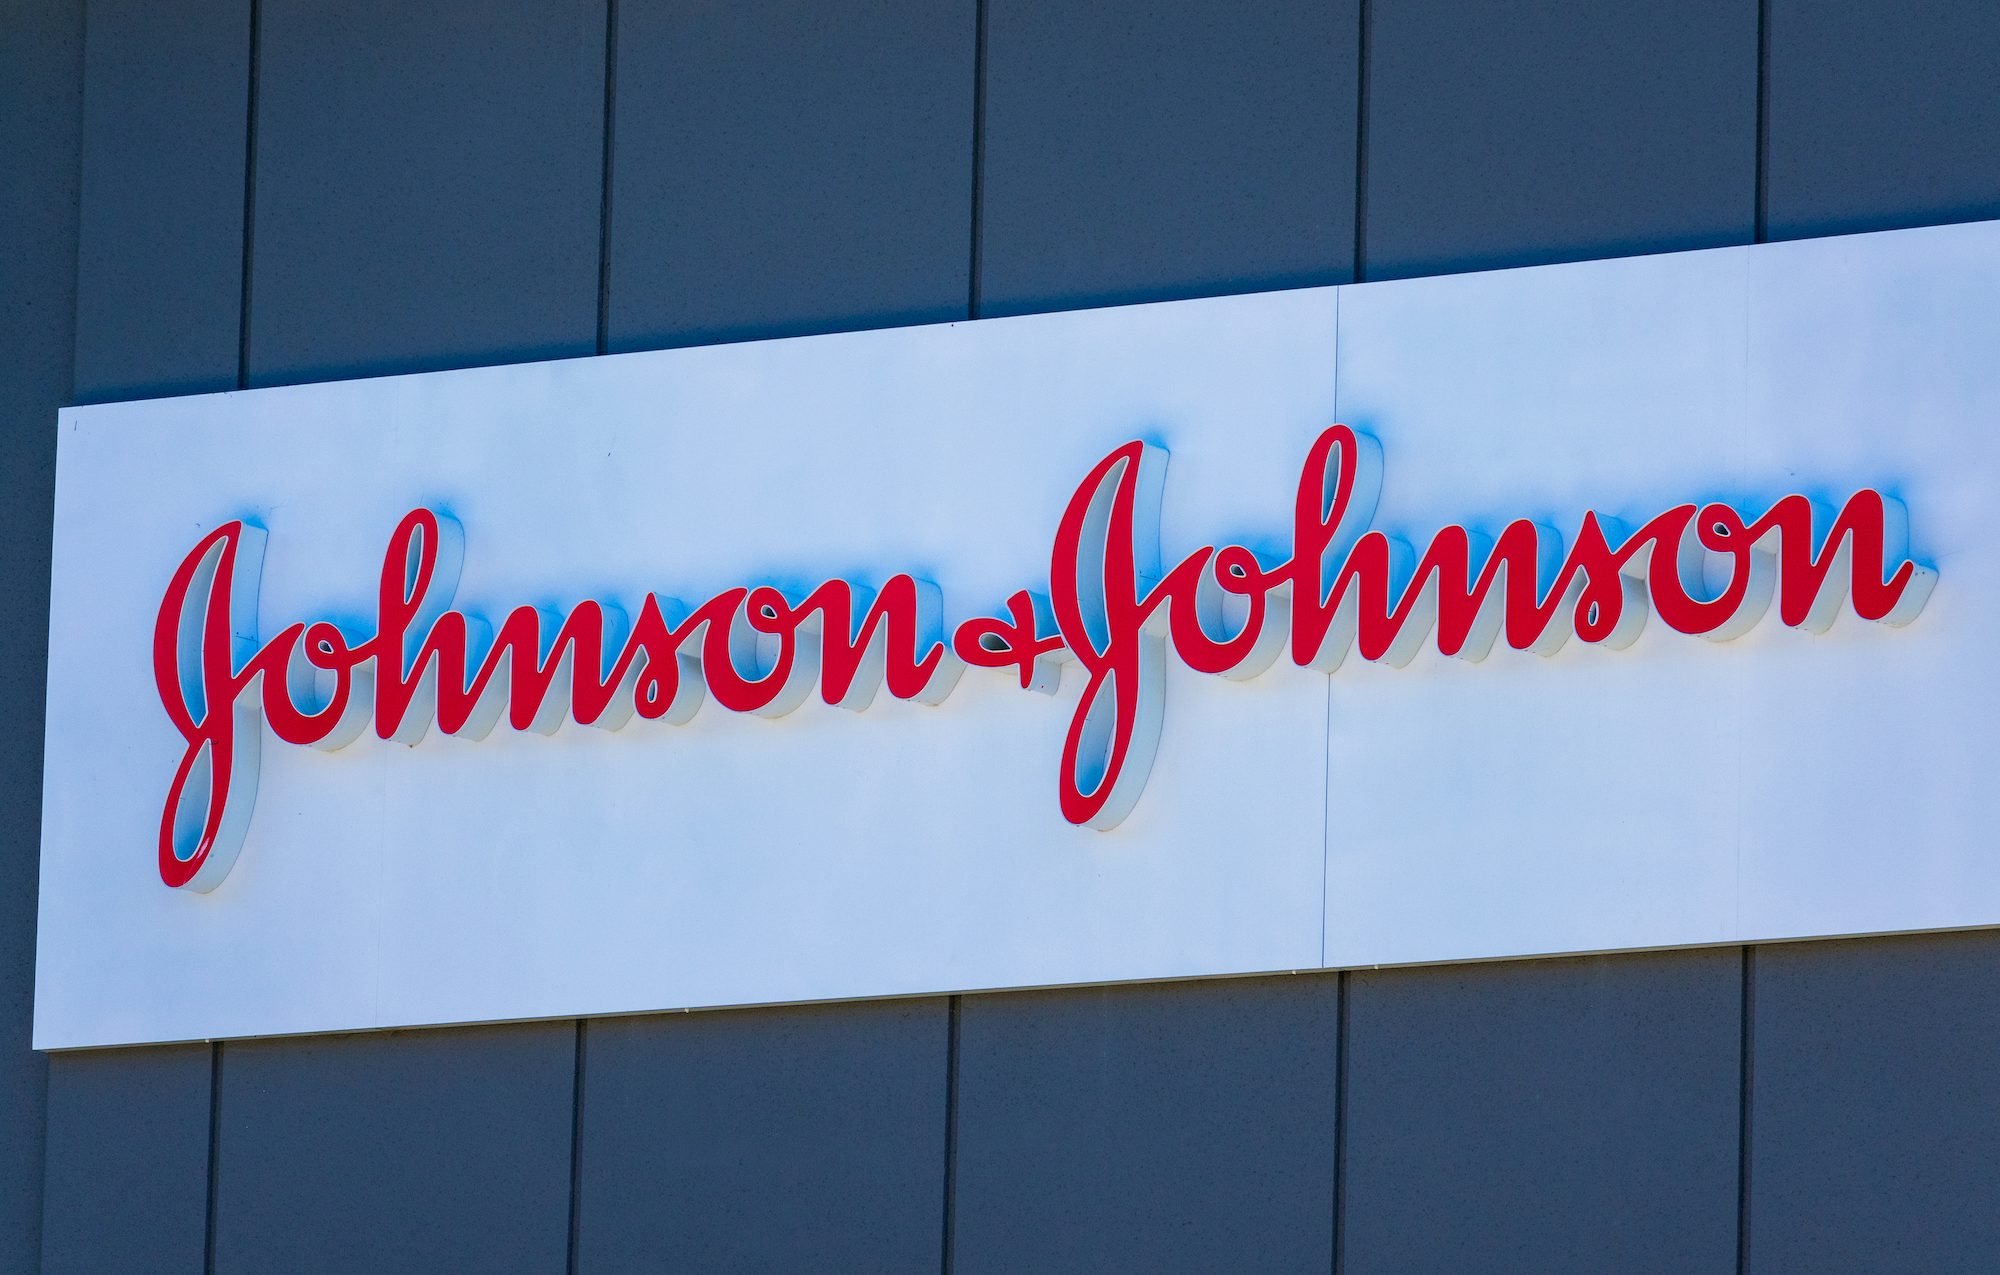 Johnson & Johnson unveils new logo and visual identity